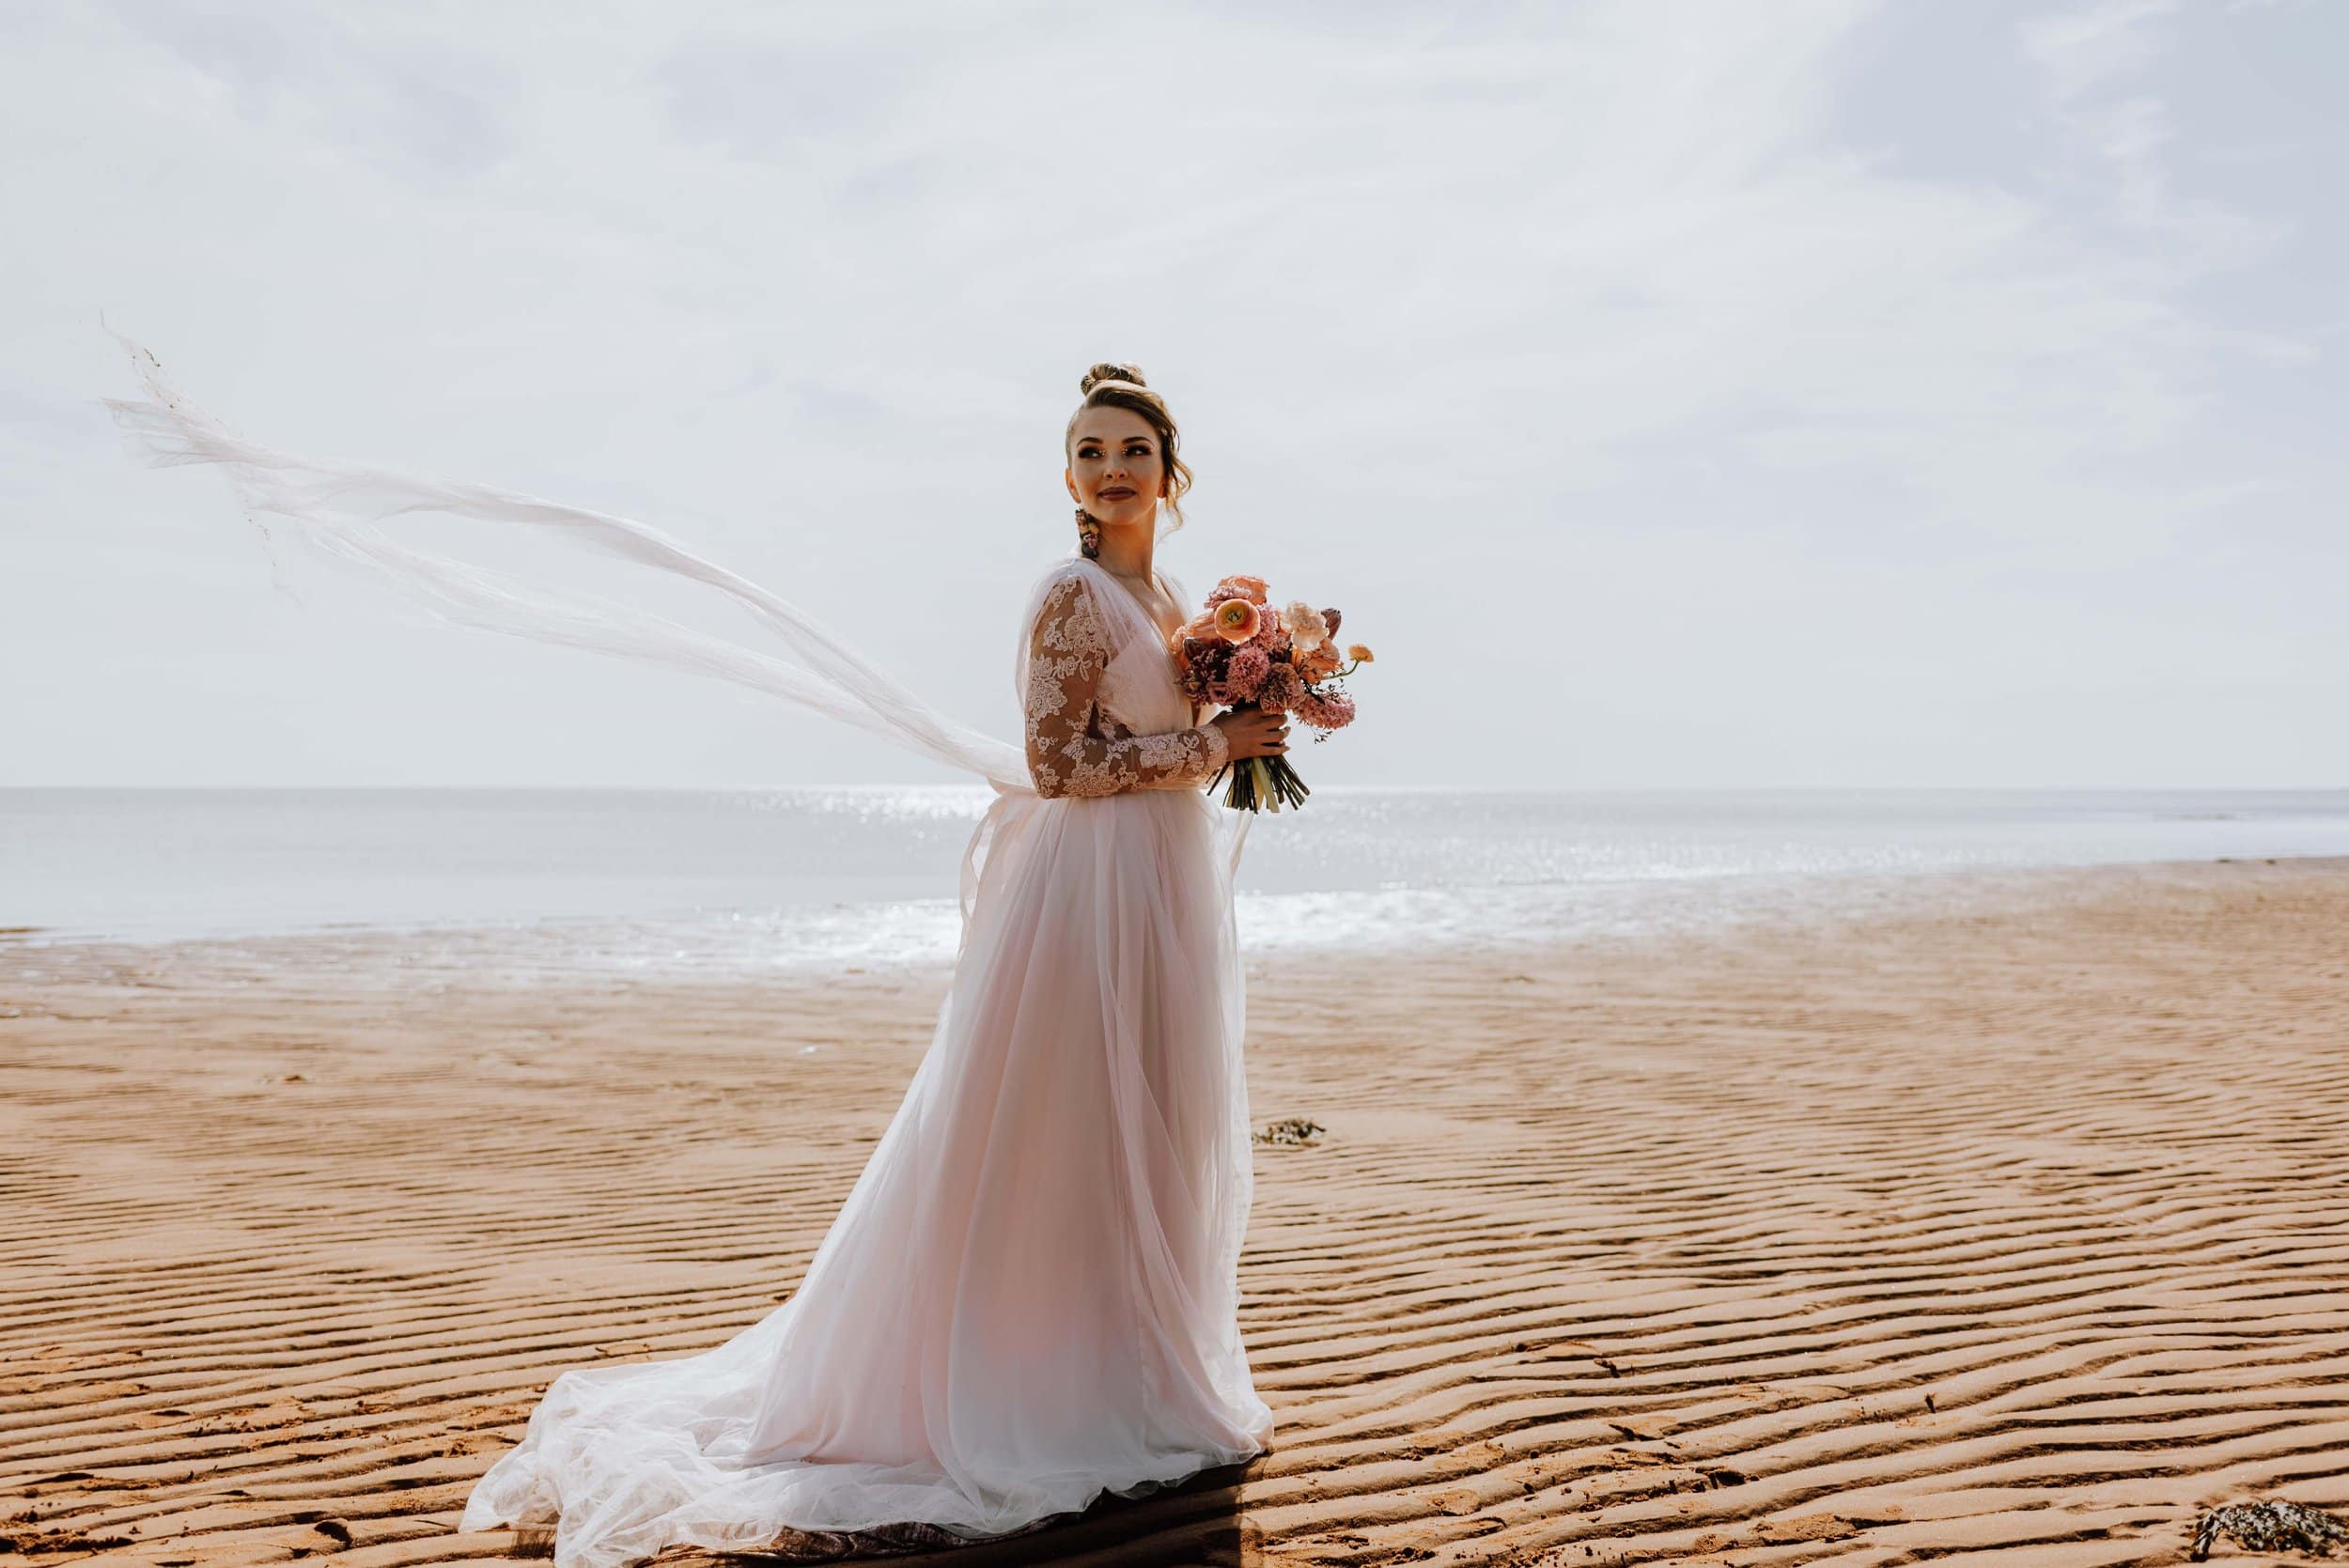 Prince Edward Island Wedding photographer - Michaela Bell Photography